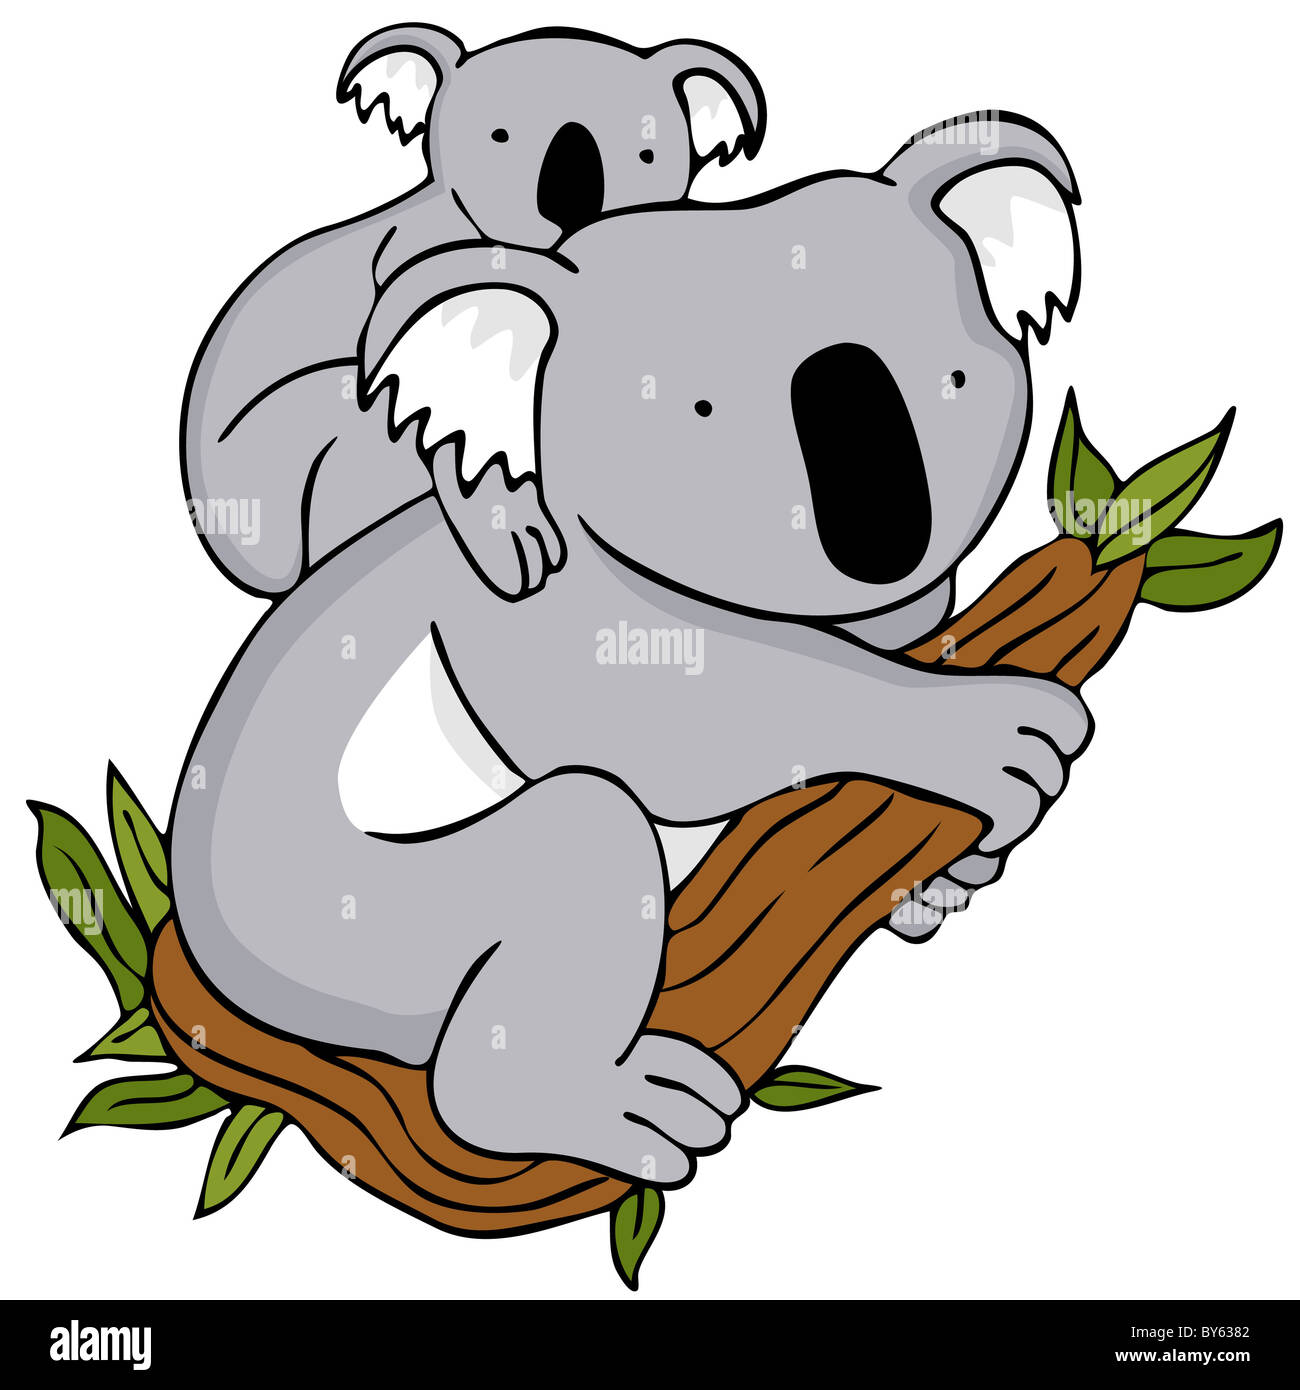 An image of a koala baby and mom cartoon drawing Stock Photo - Alamy